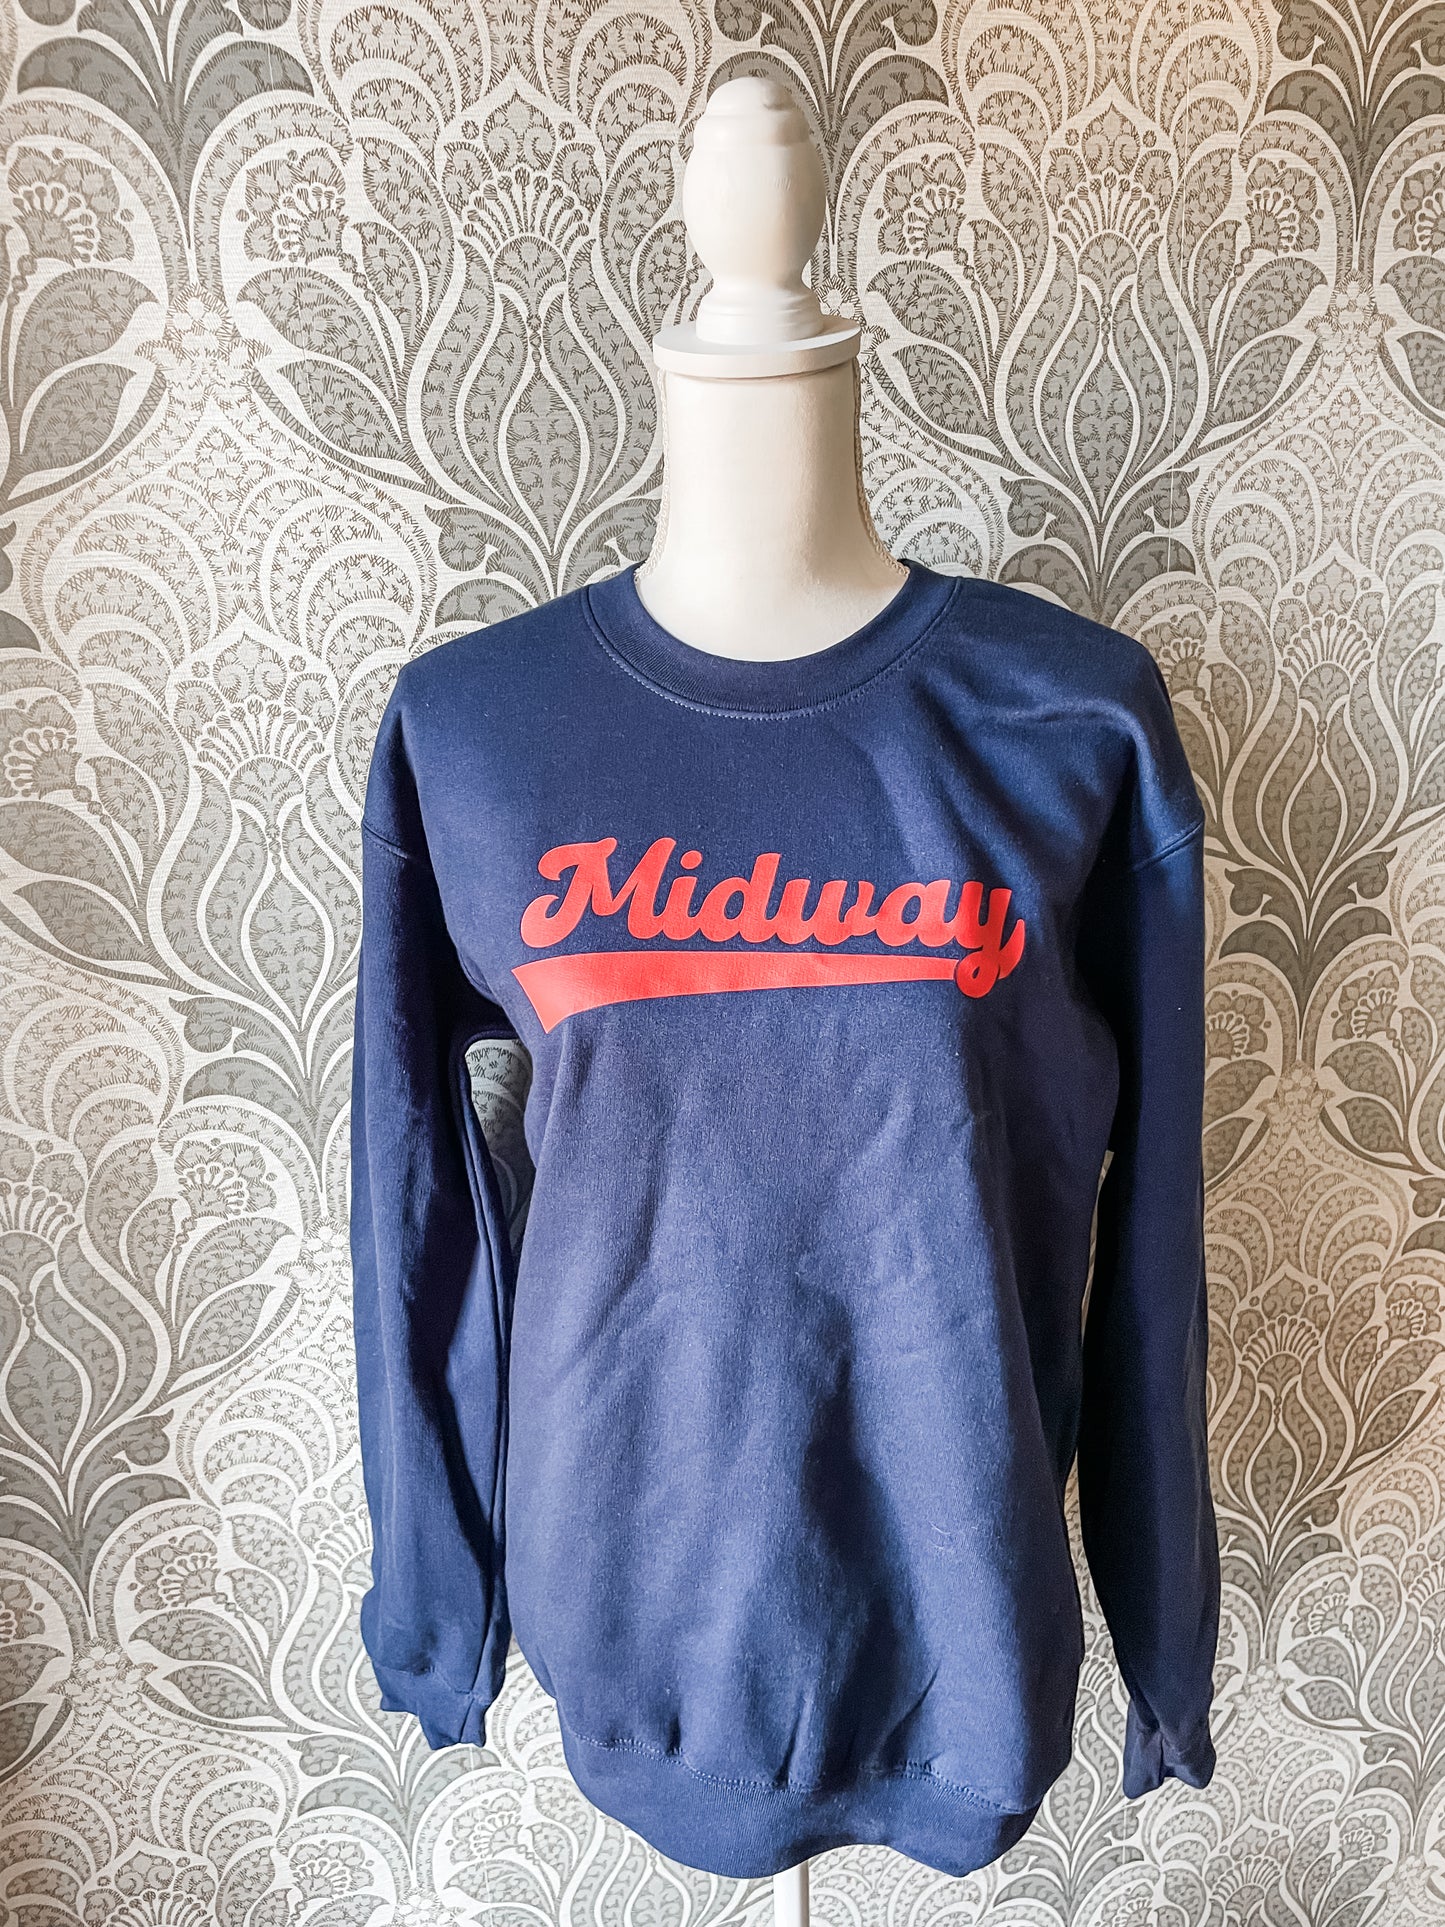 Midway sweatshirt